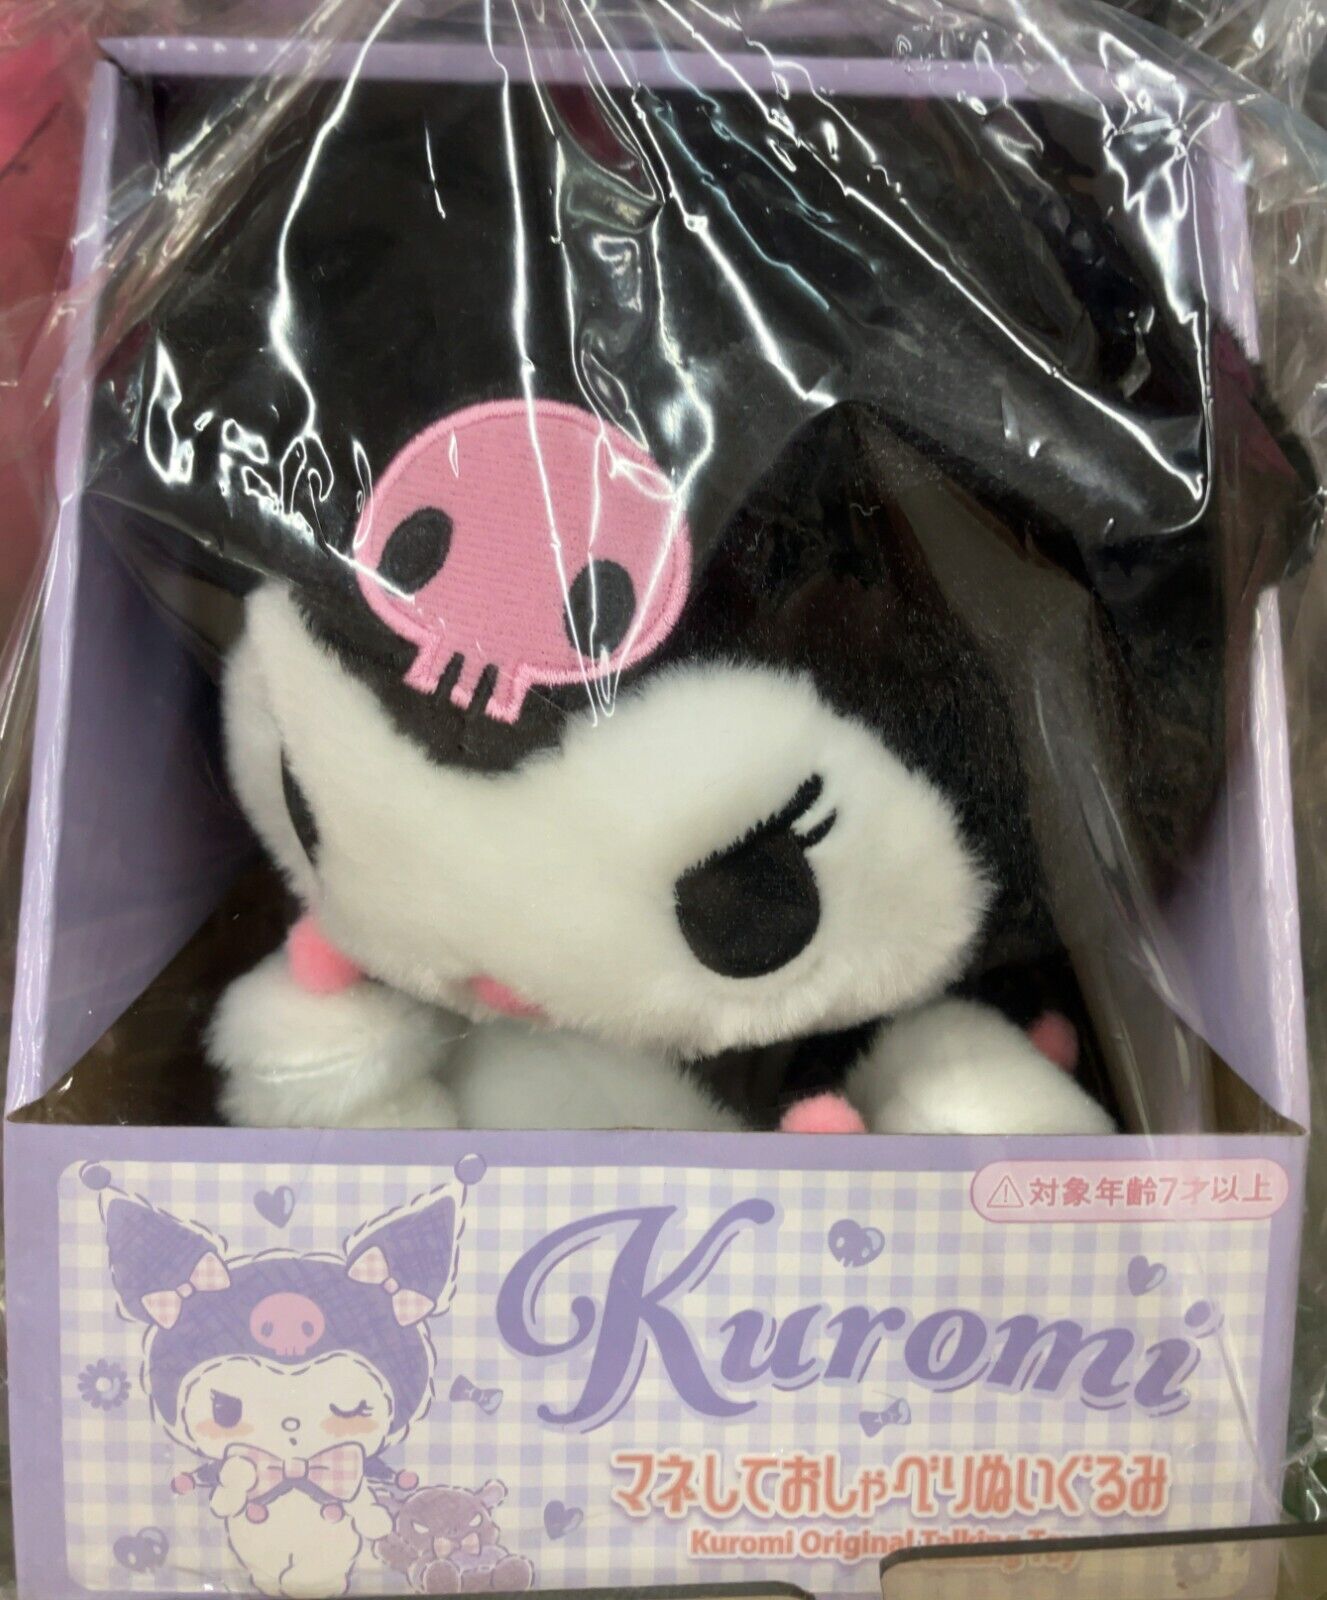 Sanrio Character Kuromi Imitate & Talking Stuffed Toy Plush Doll New Japan